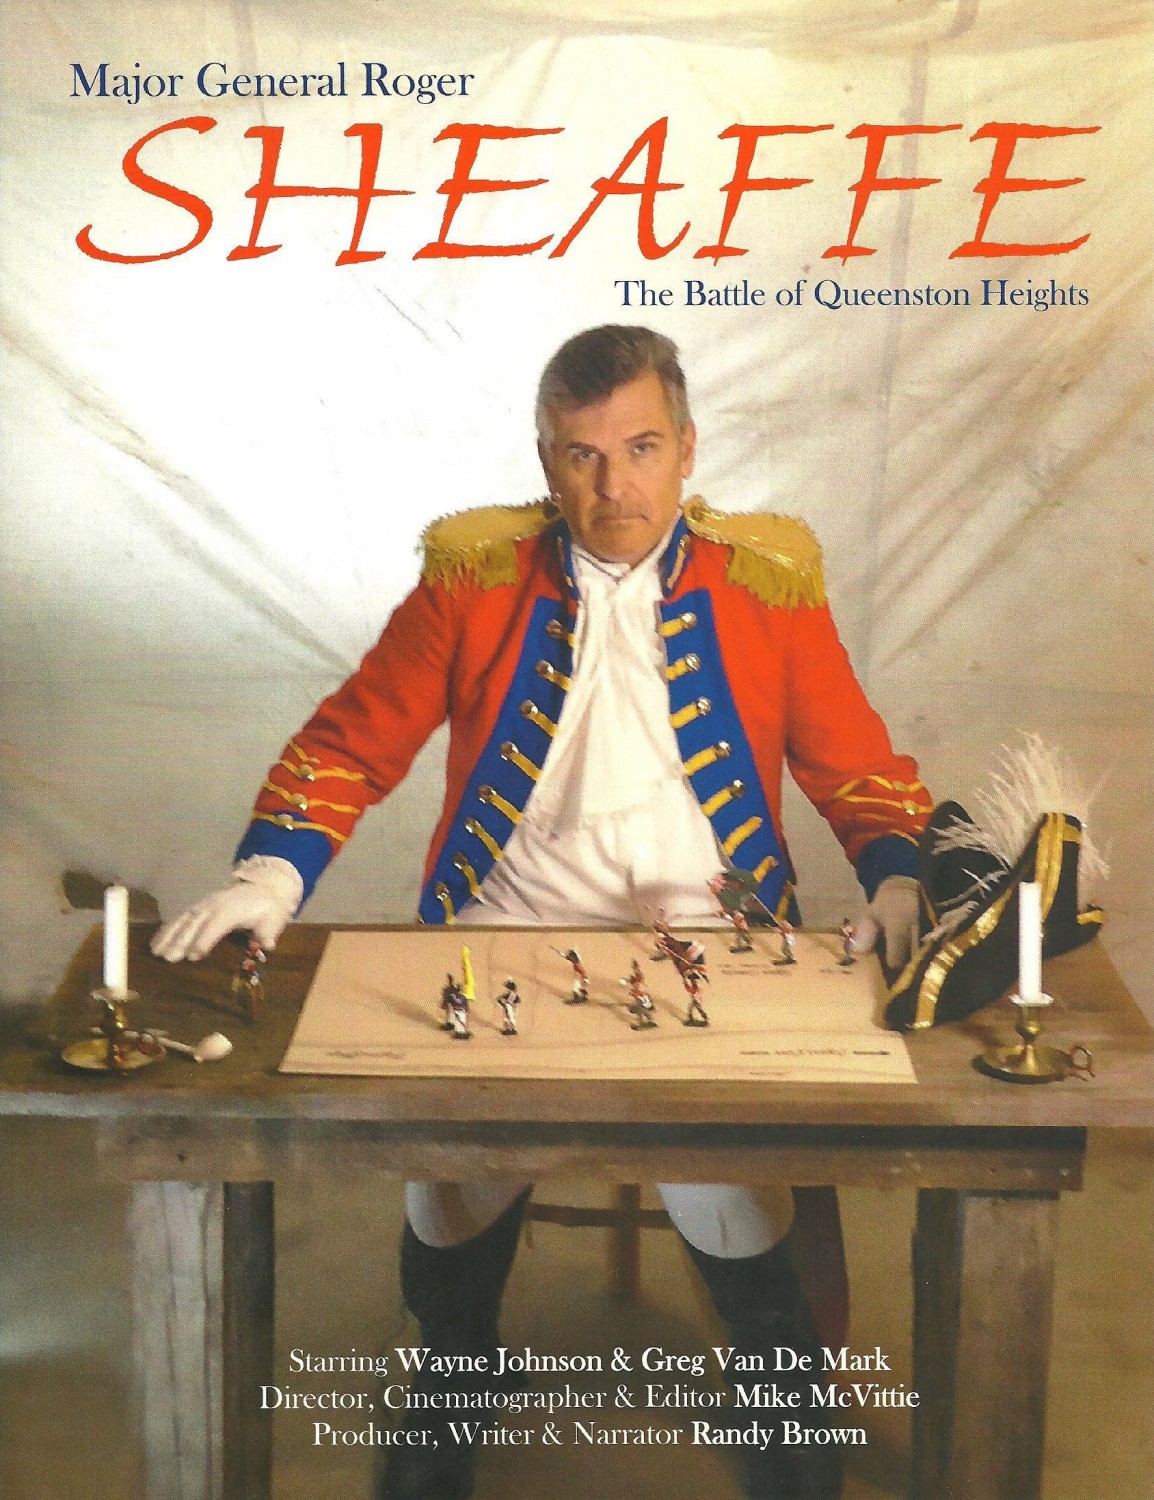 Extra Large Movie Poster Image for Major General Roger Sheaffe